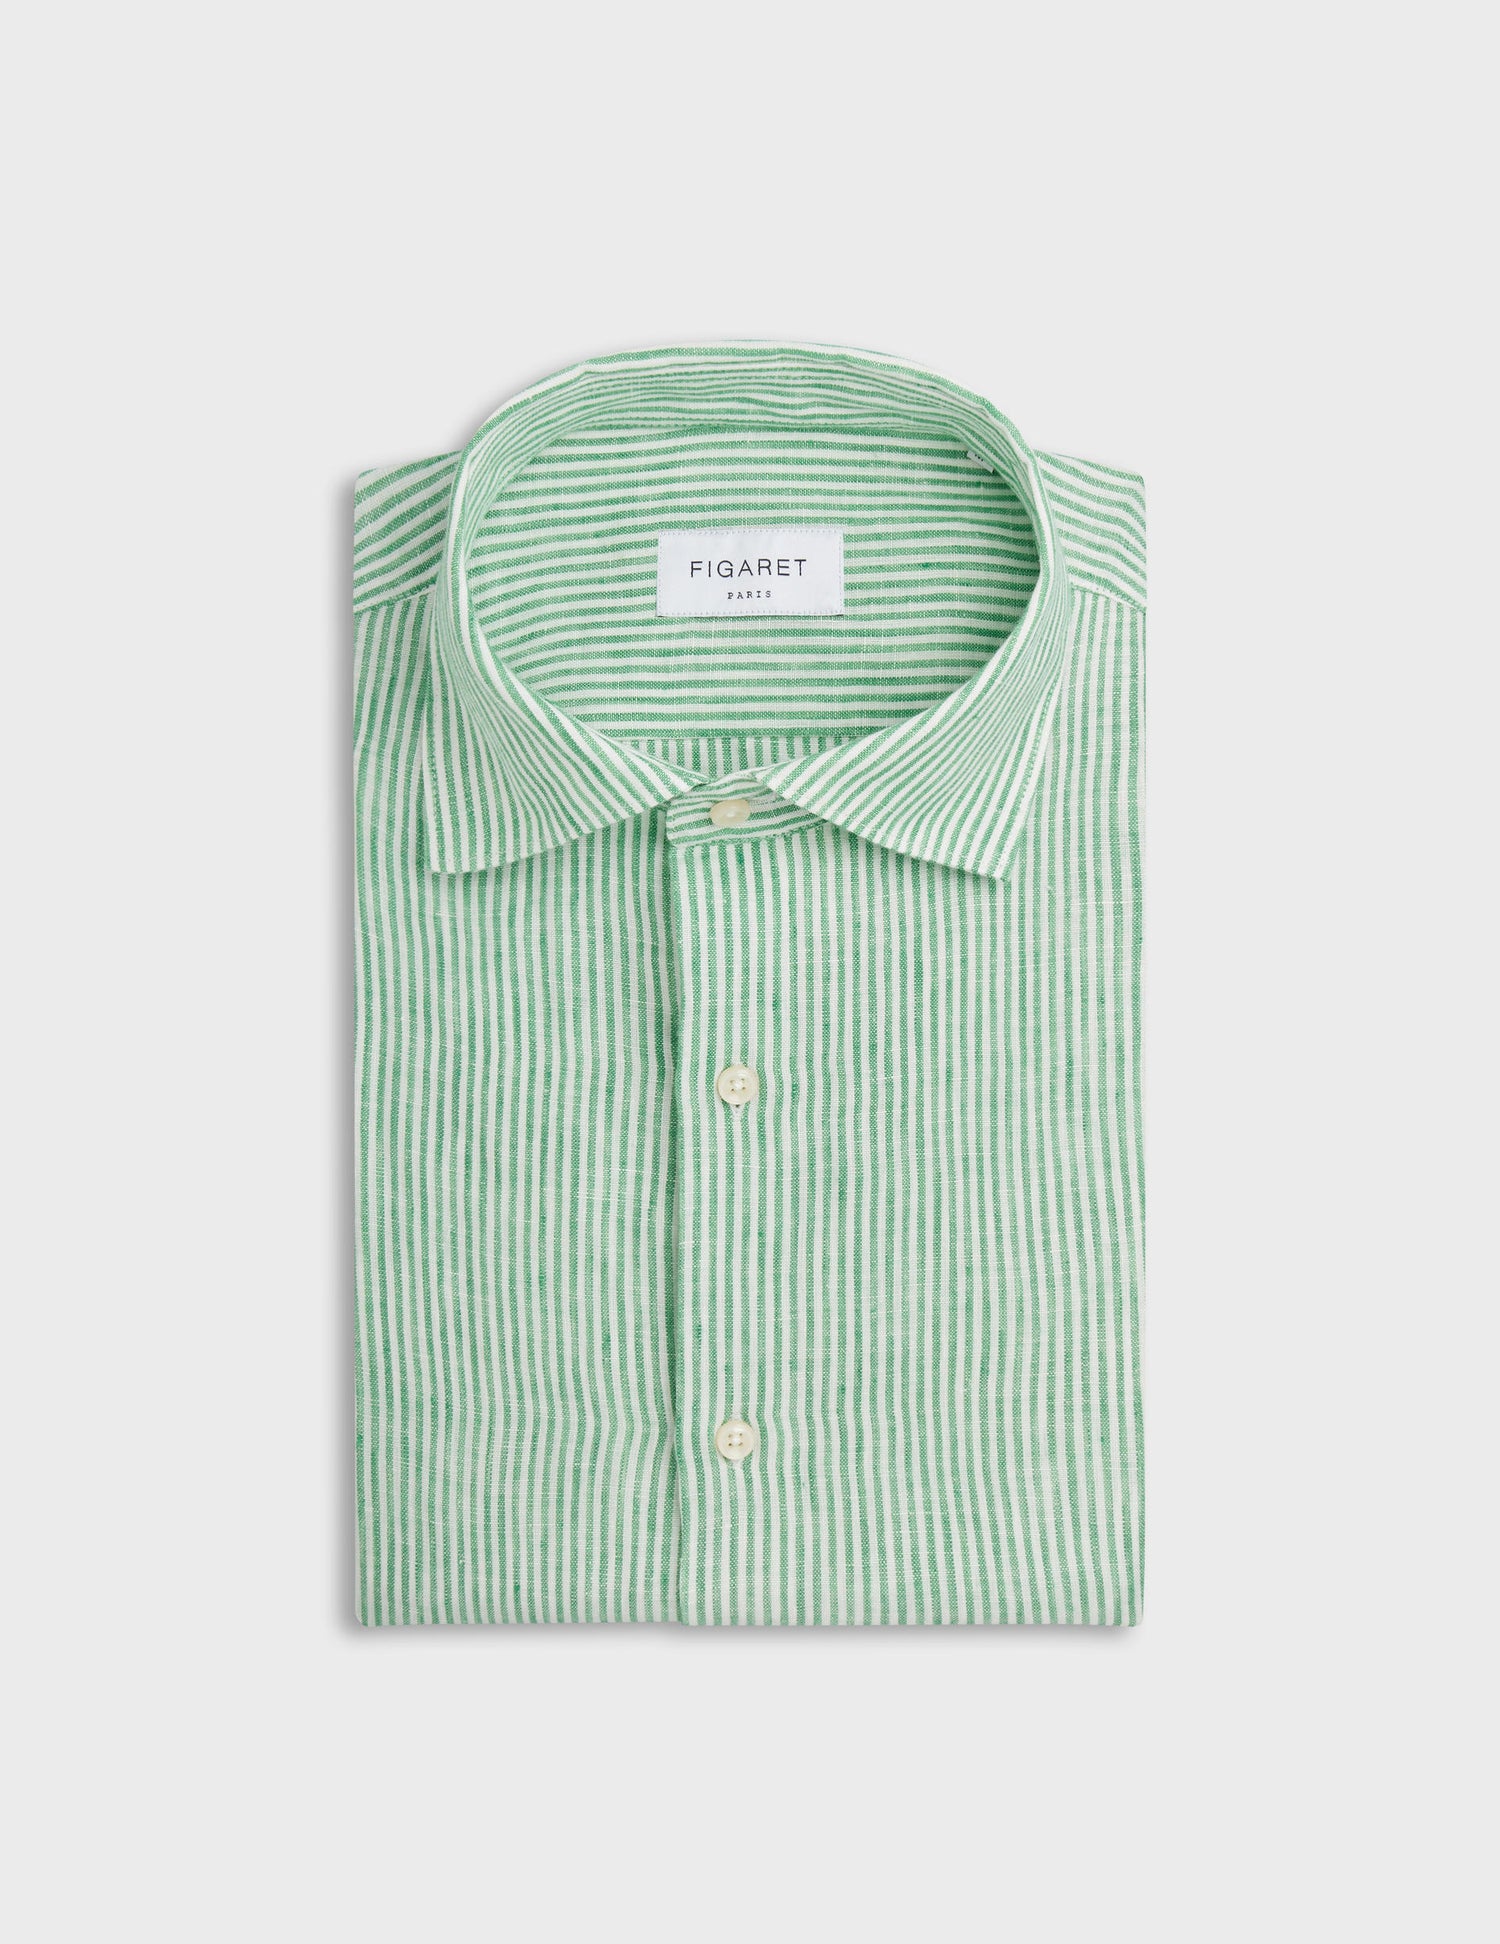 Aristote shirt in green striped linen - Linen - Italian Collar#4